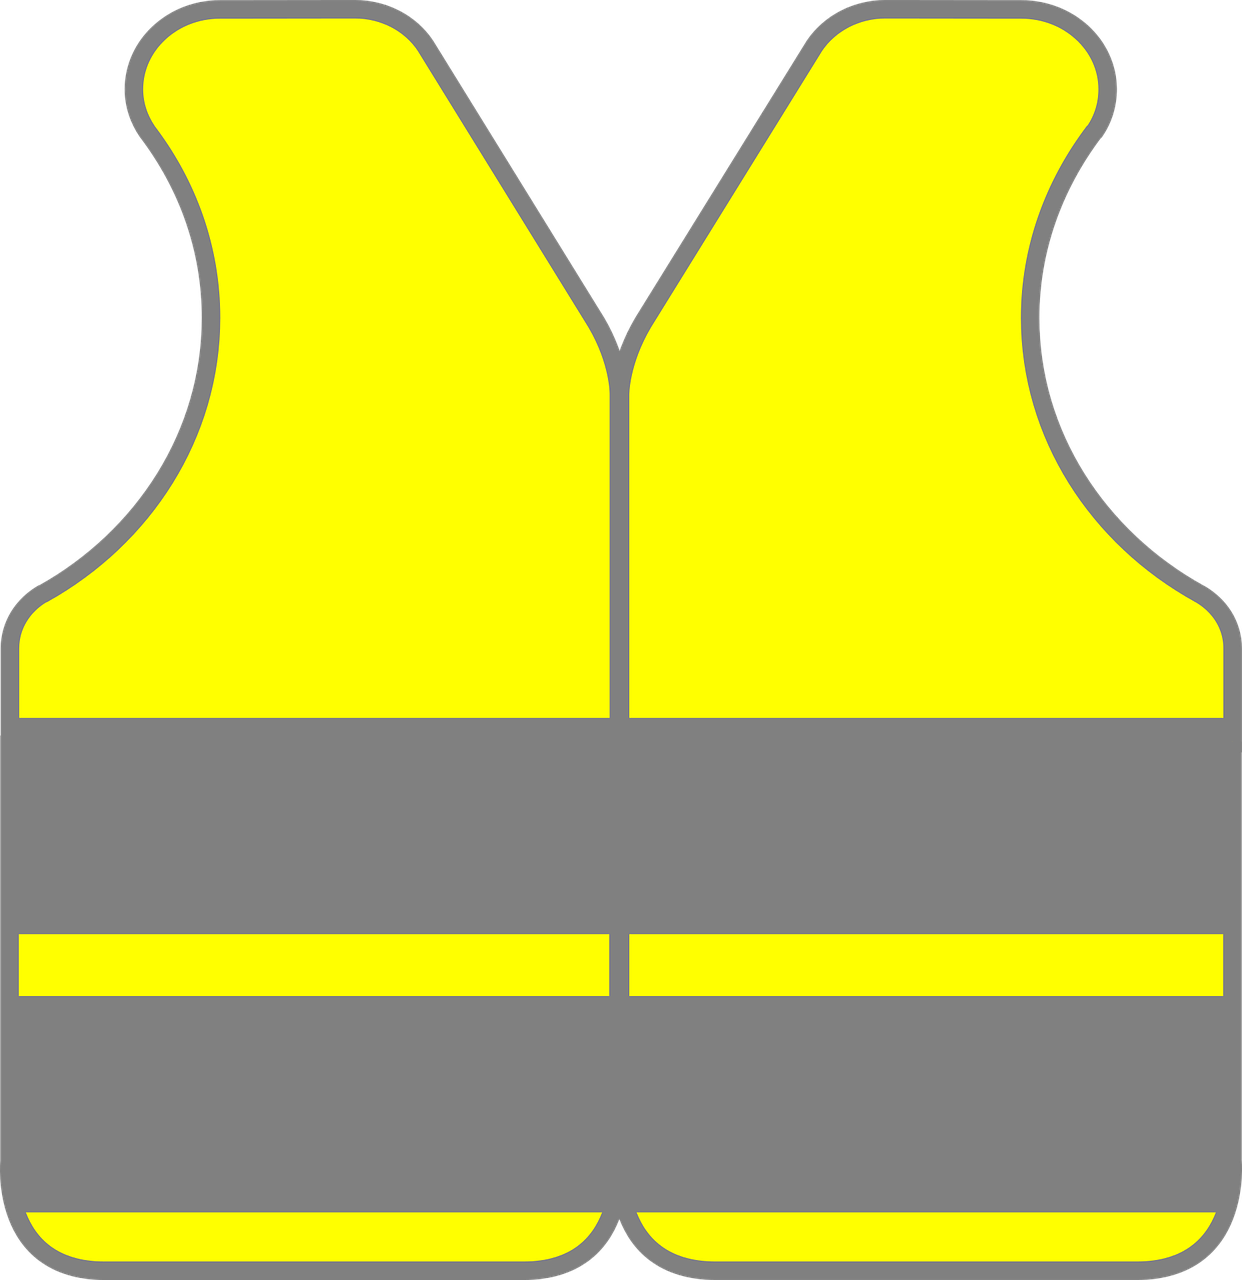 yellow jacket  safety vest  reflective vest free photo